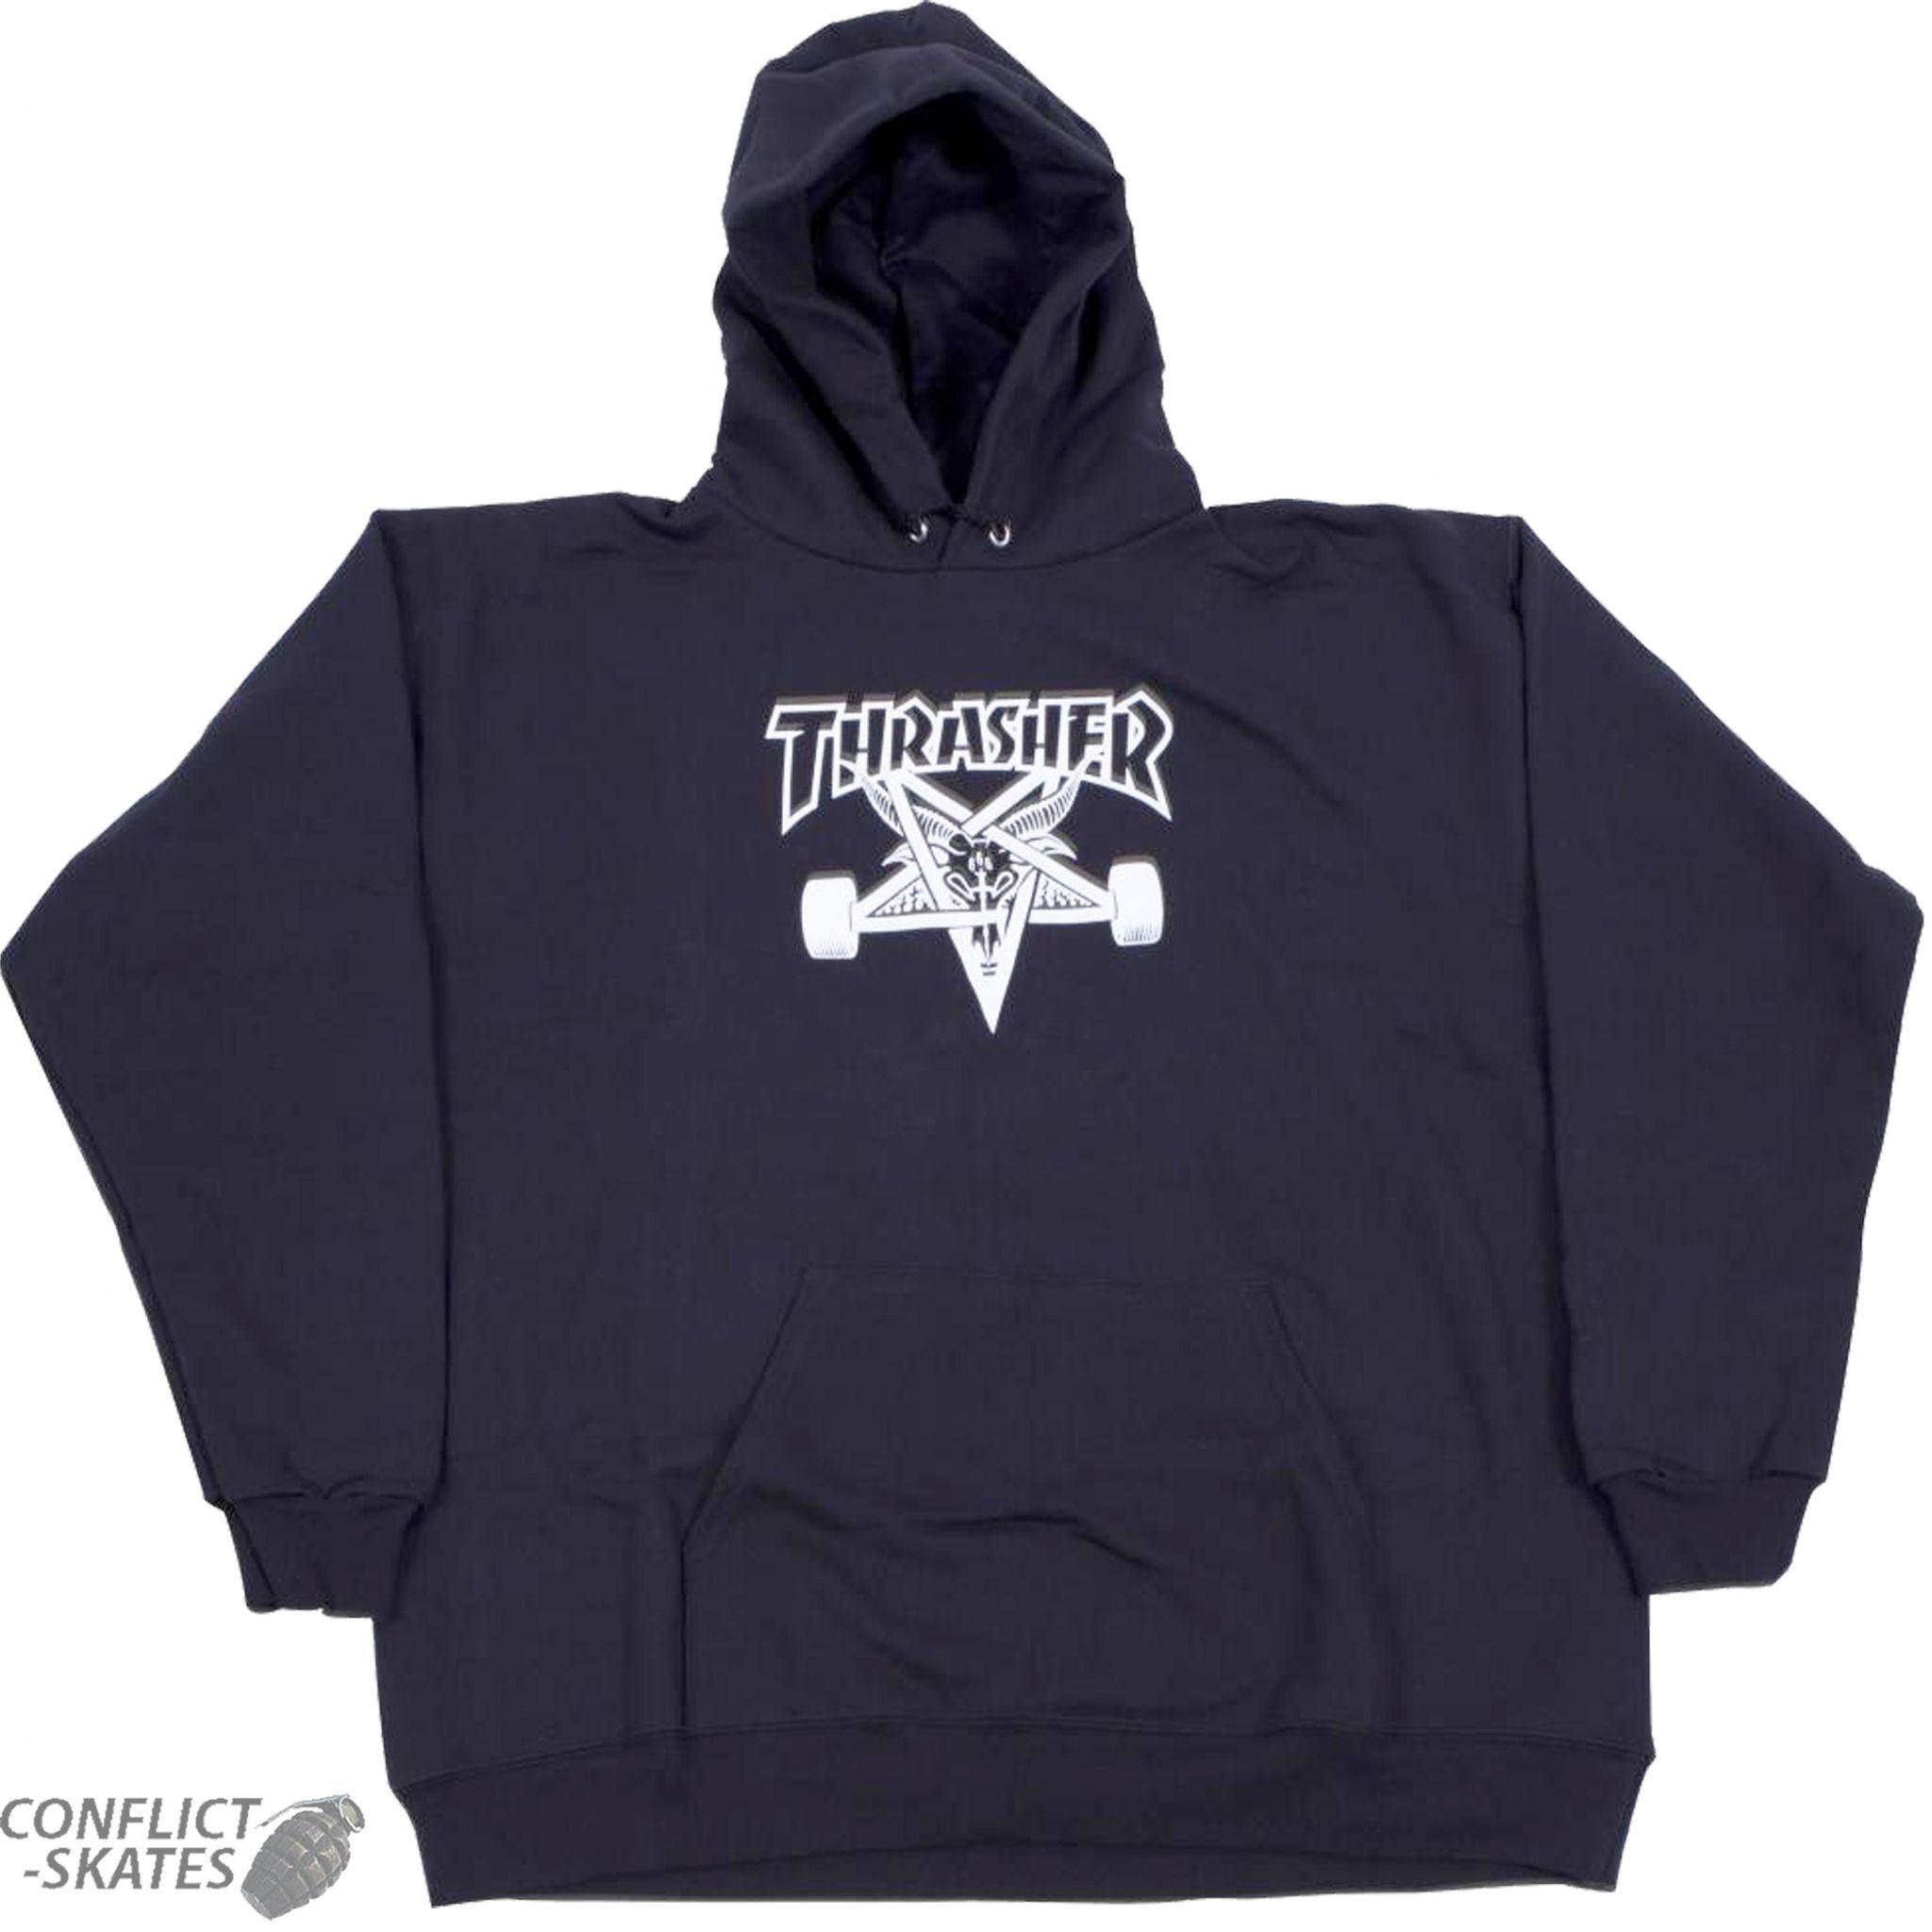 Small Thrasher Goat Logo - THRASHER Skate Goat punk Skateboard Hood Sweatshirt Black S M L XL ...